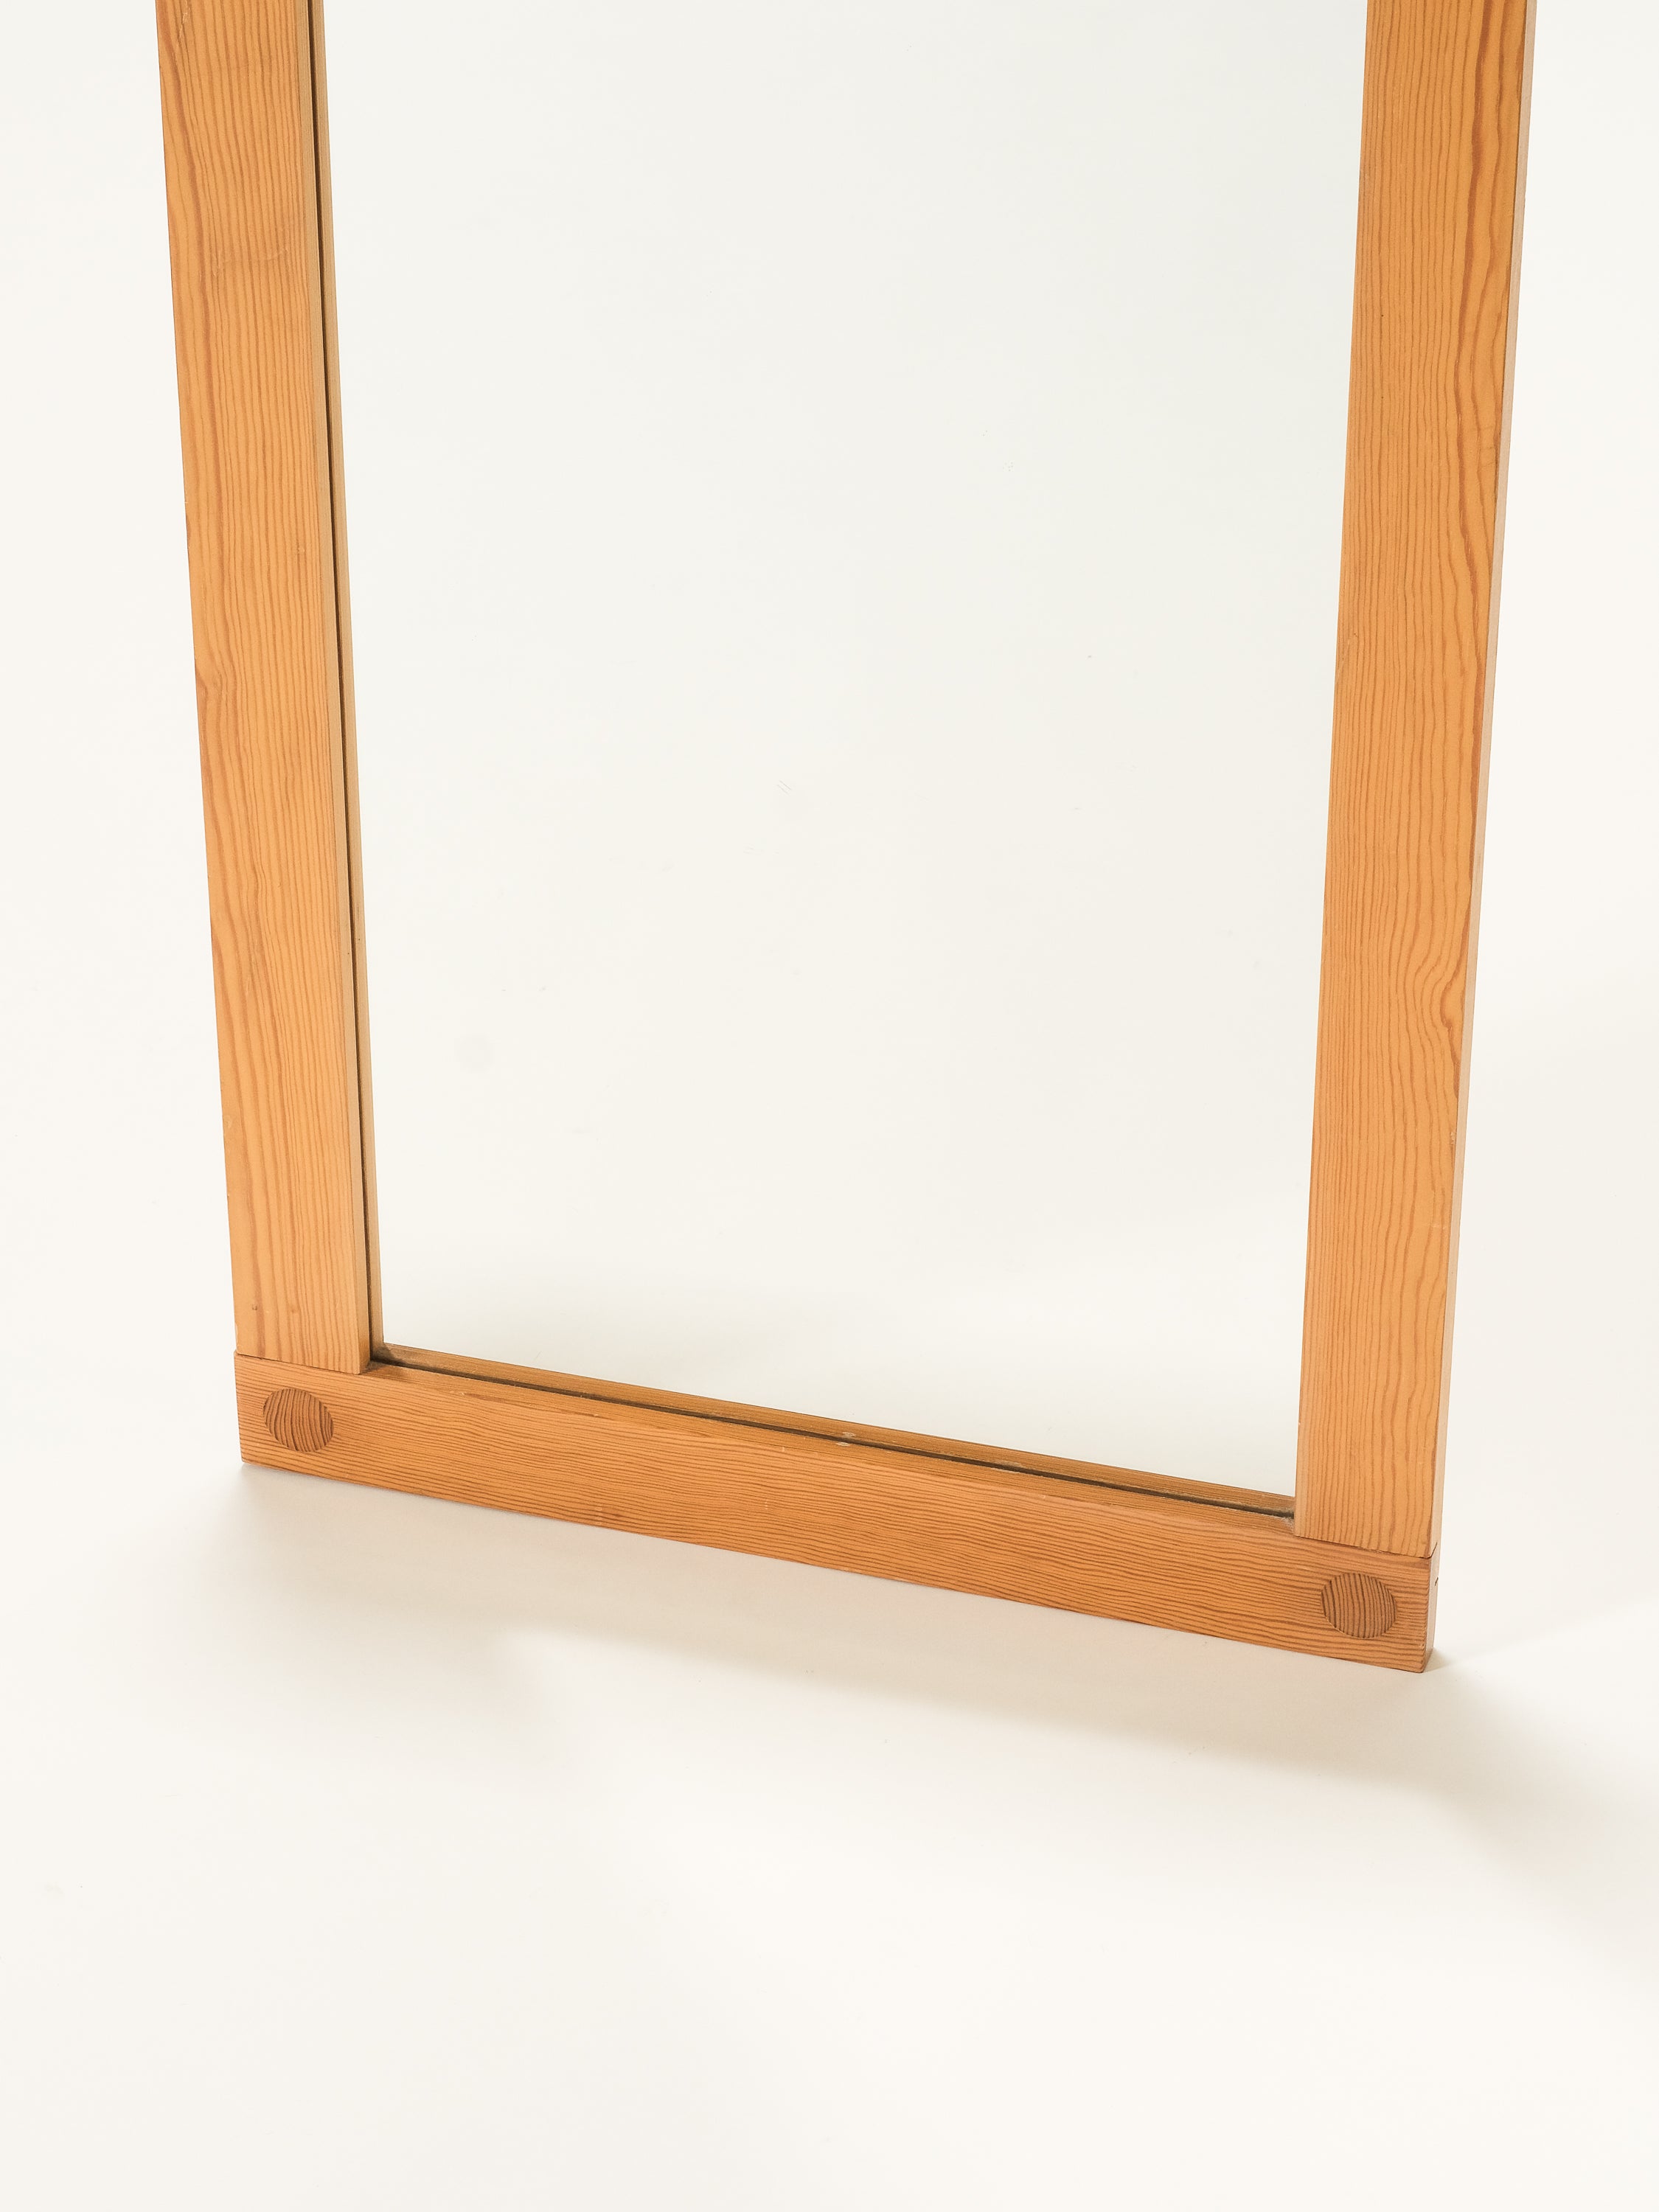 Pine Framed Mirror, Sweden, 1970s